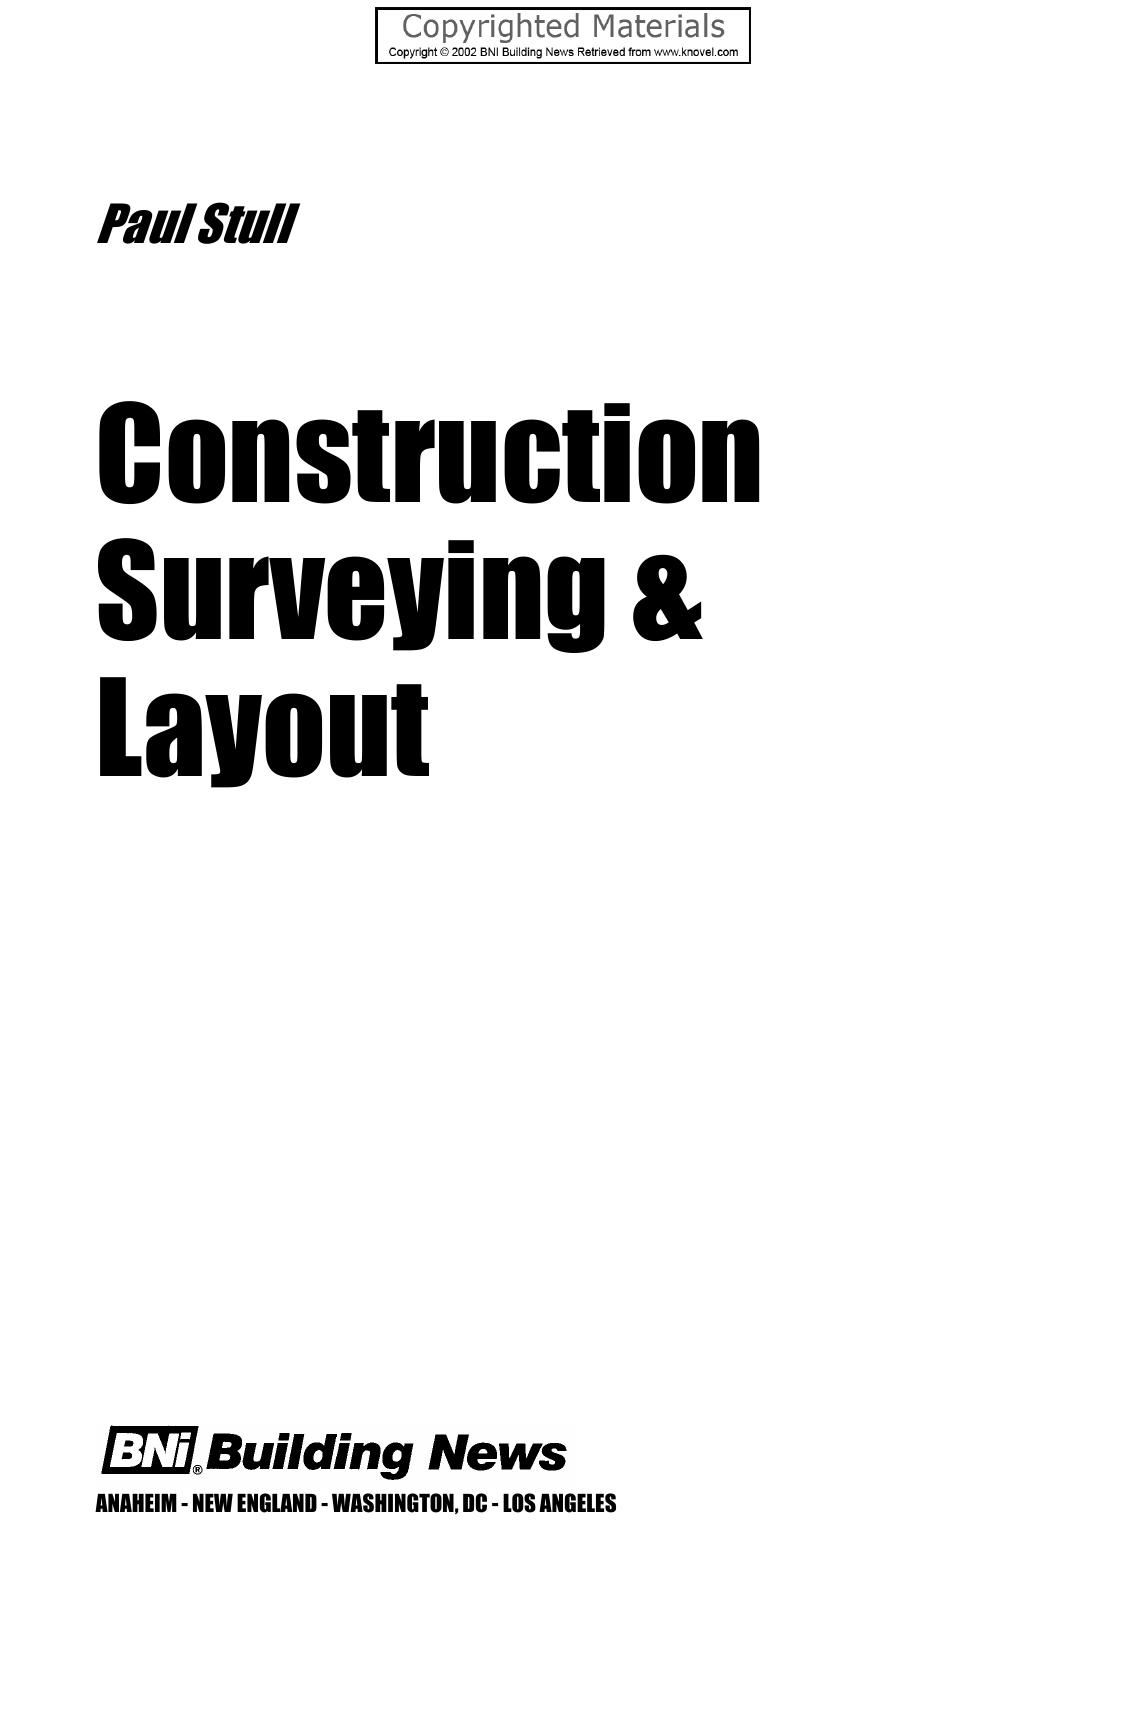 Stull, Paul-Construction surveying & layout-BNi Building News, Prentice Hall (2002)